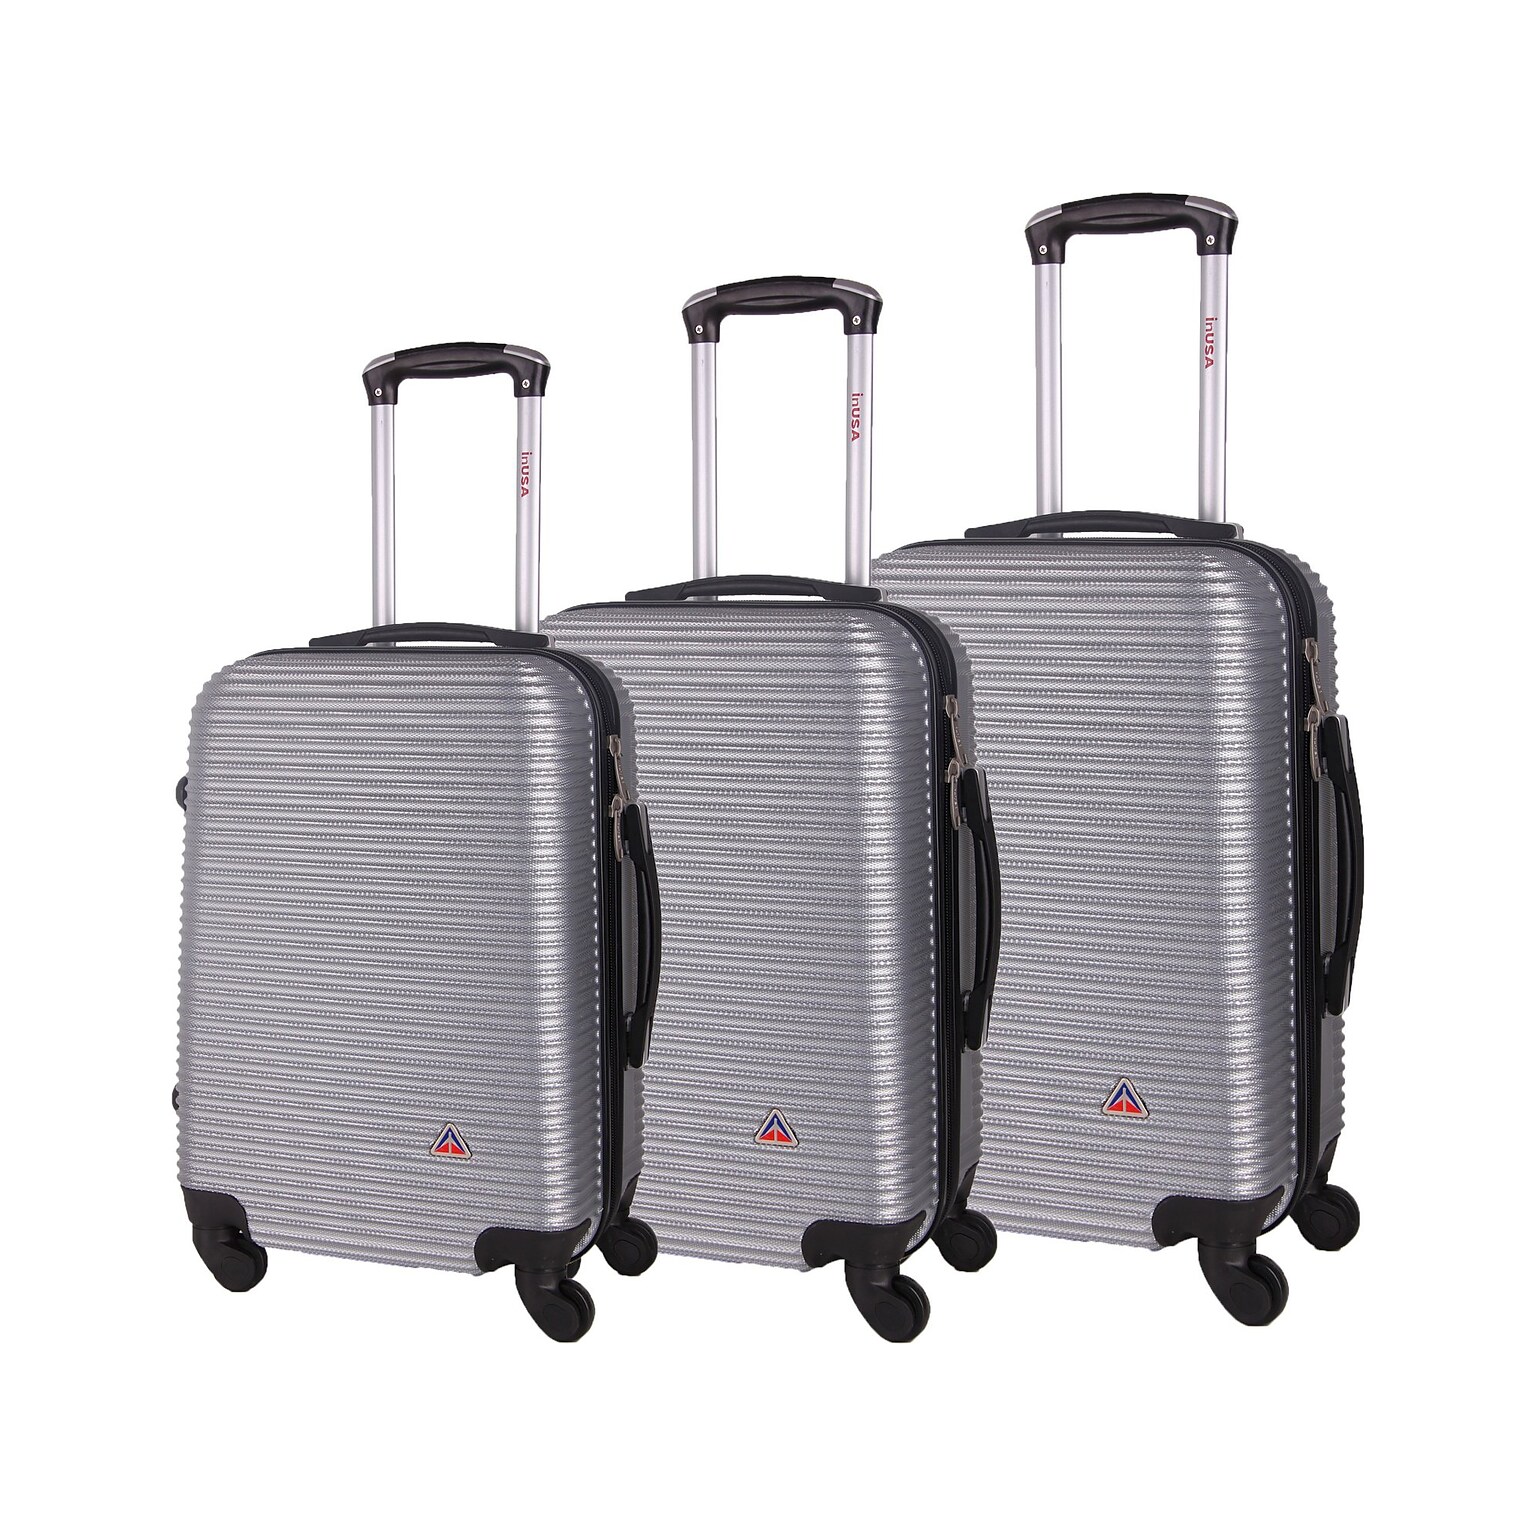 InUSA Royal 3-Piece Hardside Spinner Luggage Set, Silver (IUROYSML-SIL)